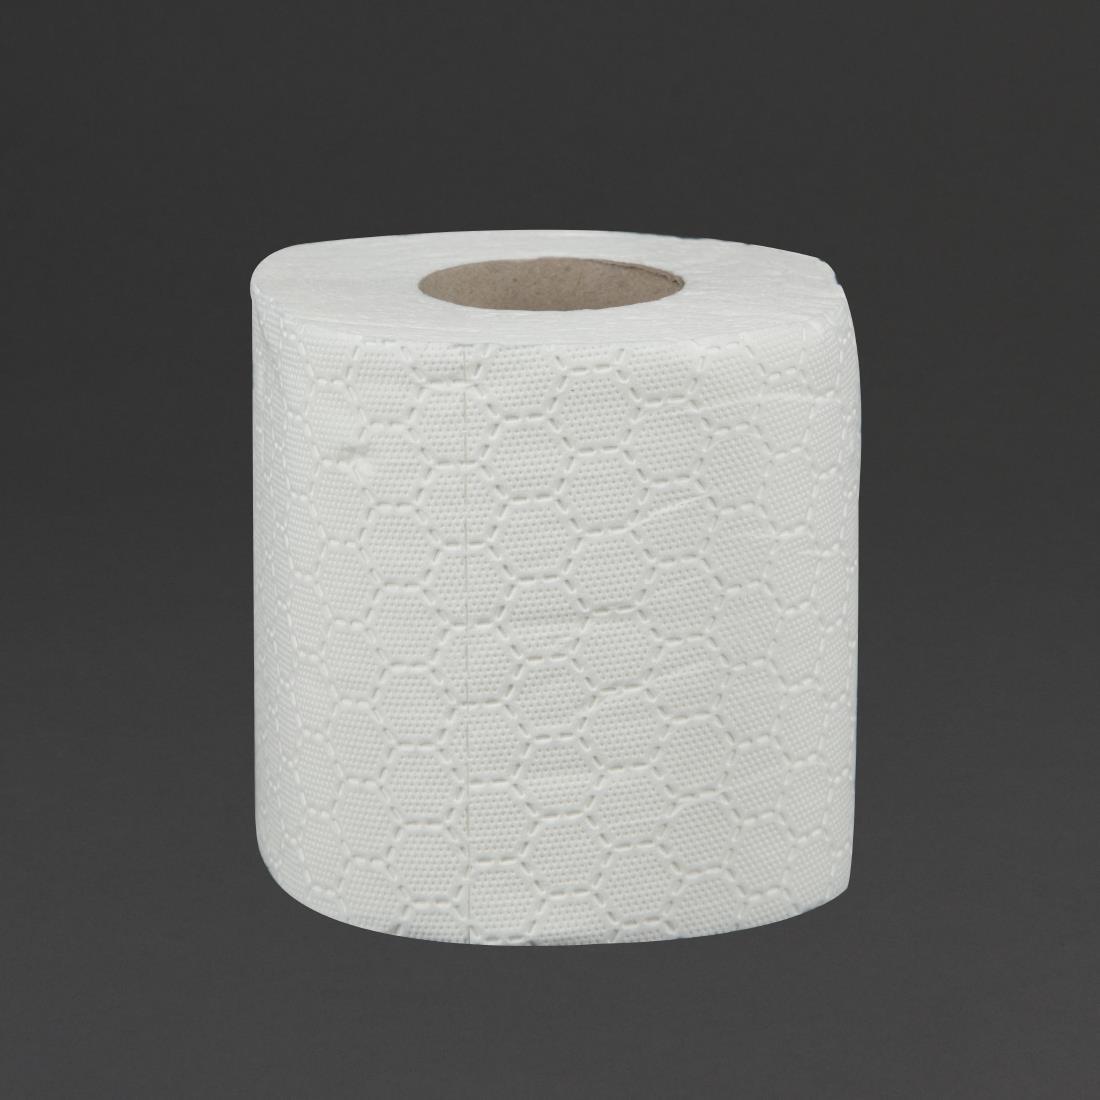 Jantex Premium Toilet Paper 3-Ply (Pack of 40) - GD831  - 2